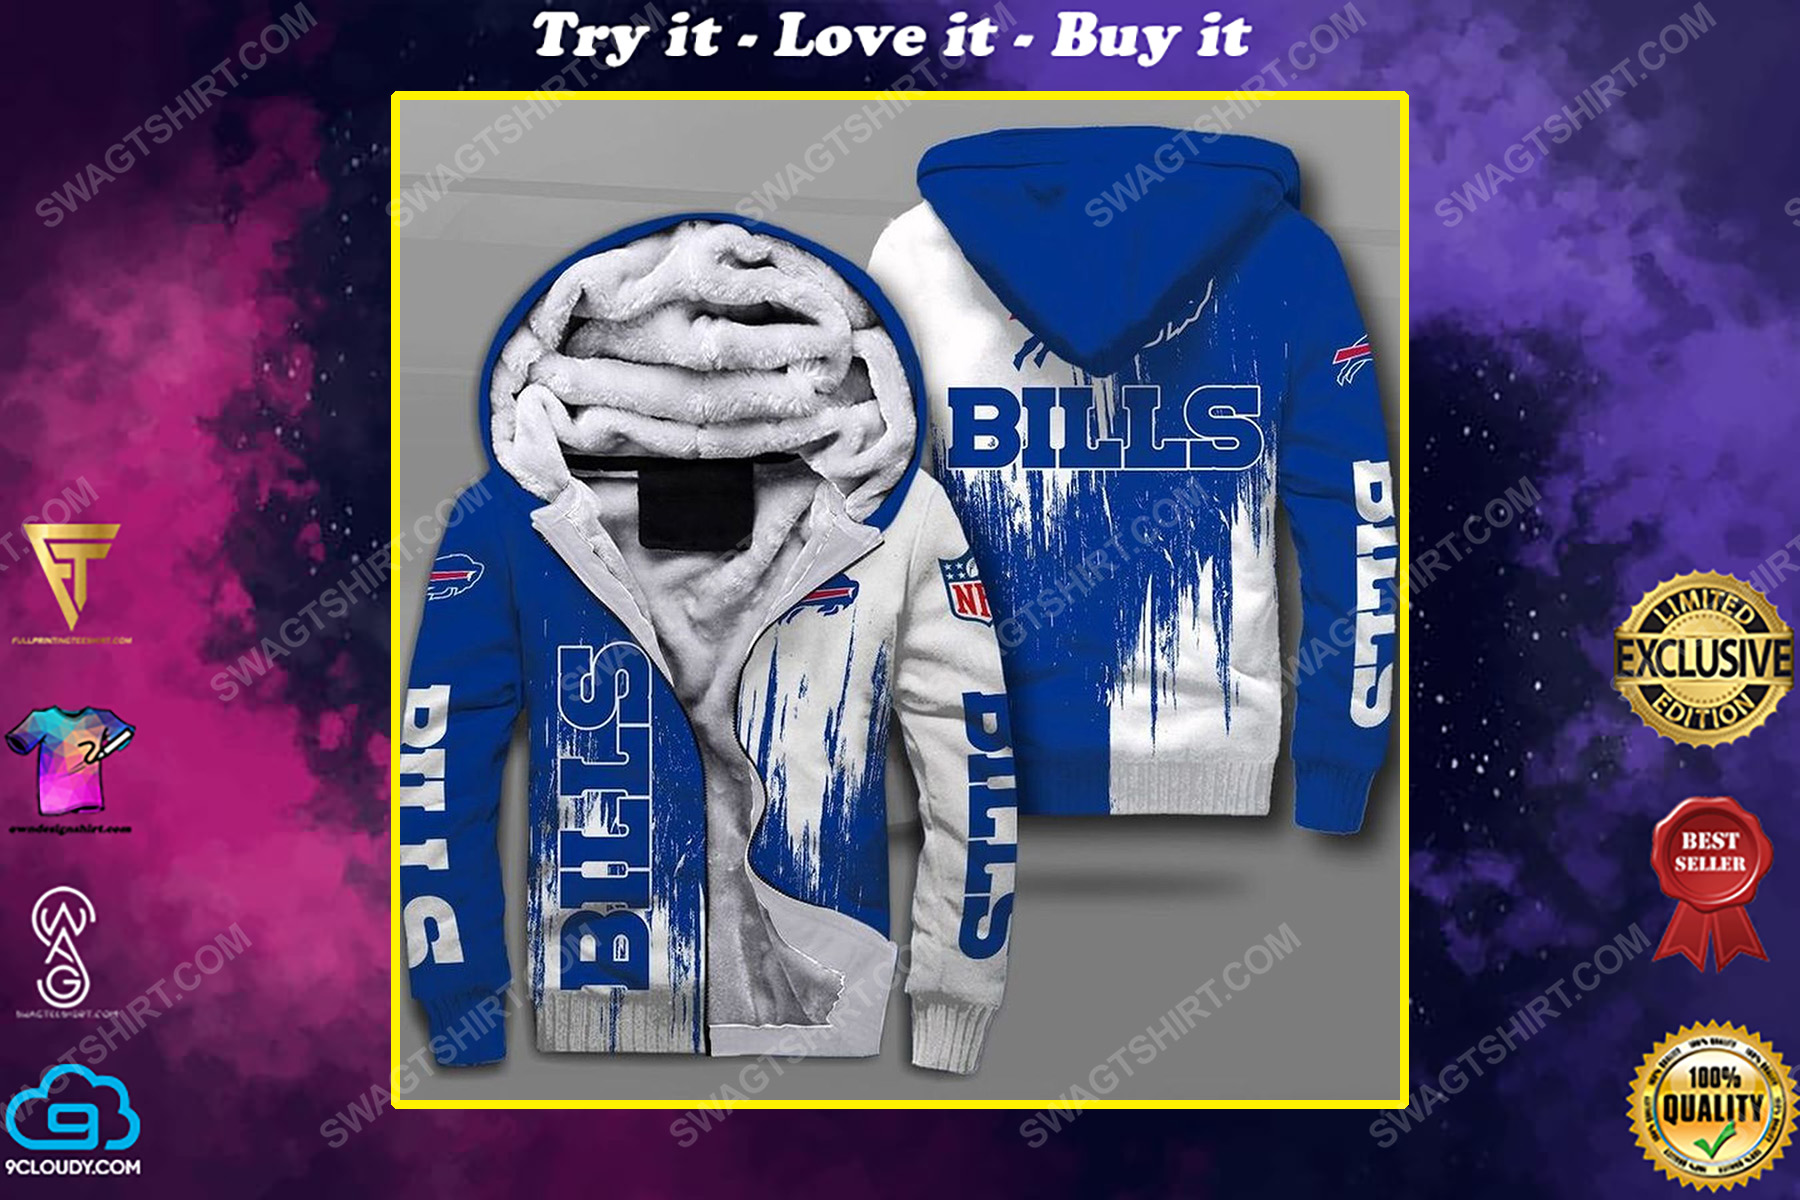 Buffalo bills football team full print shirt